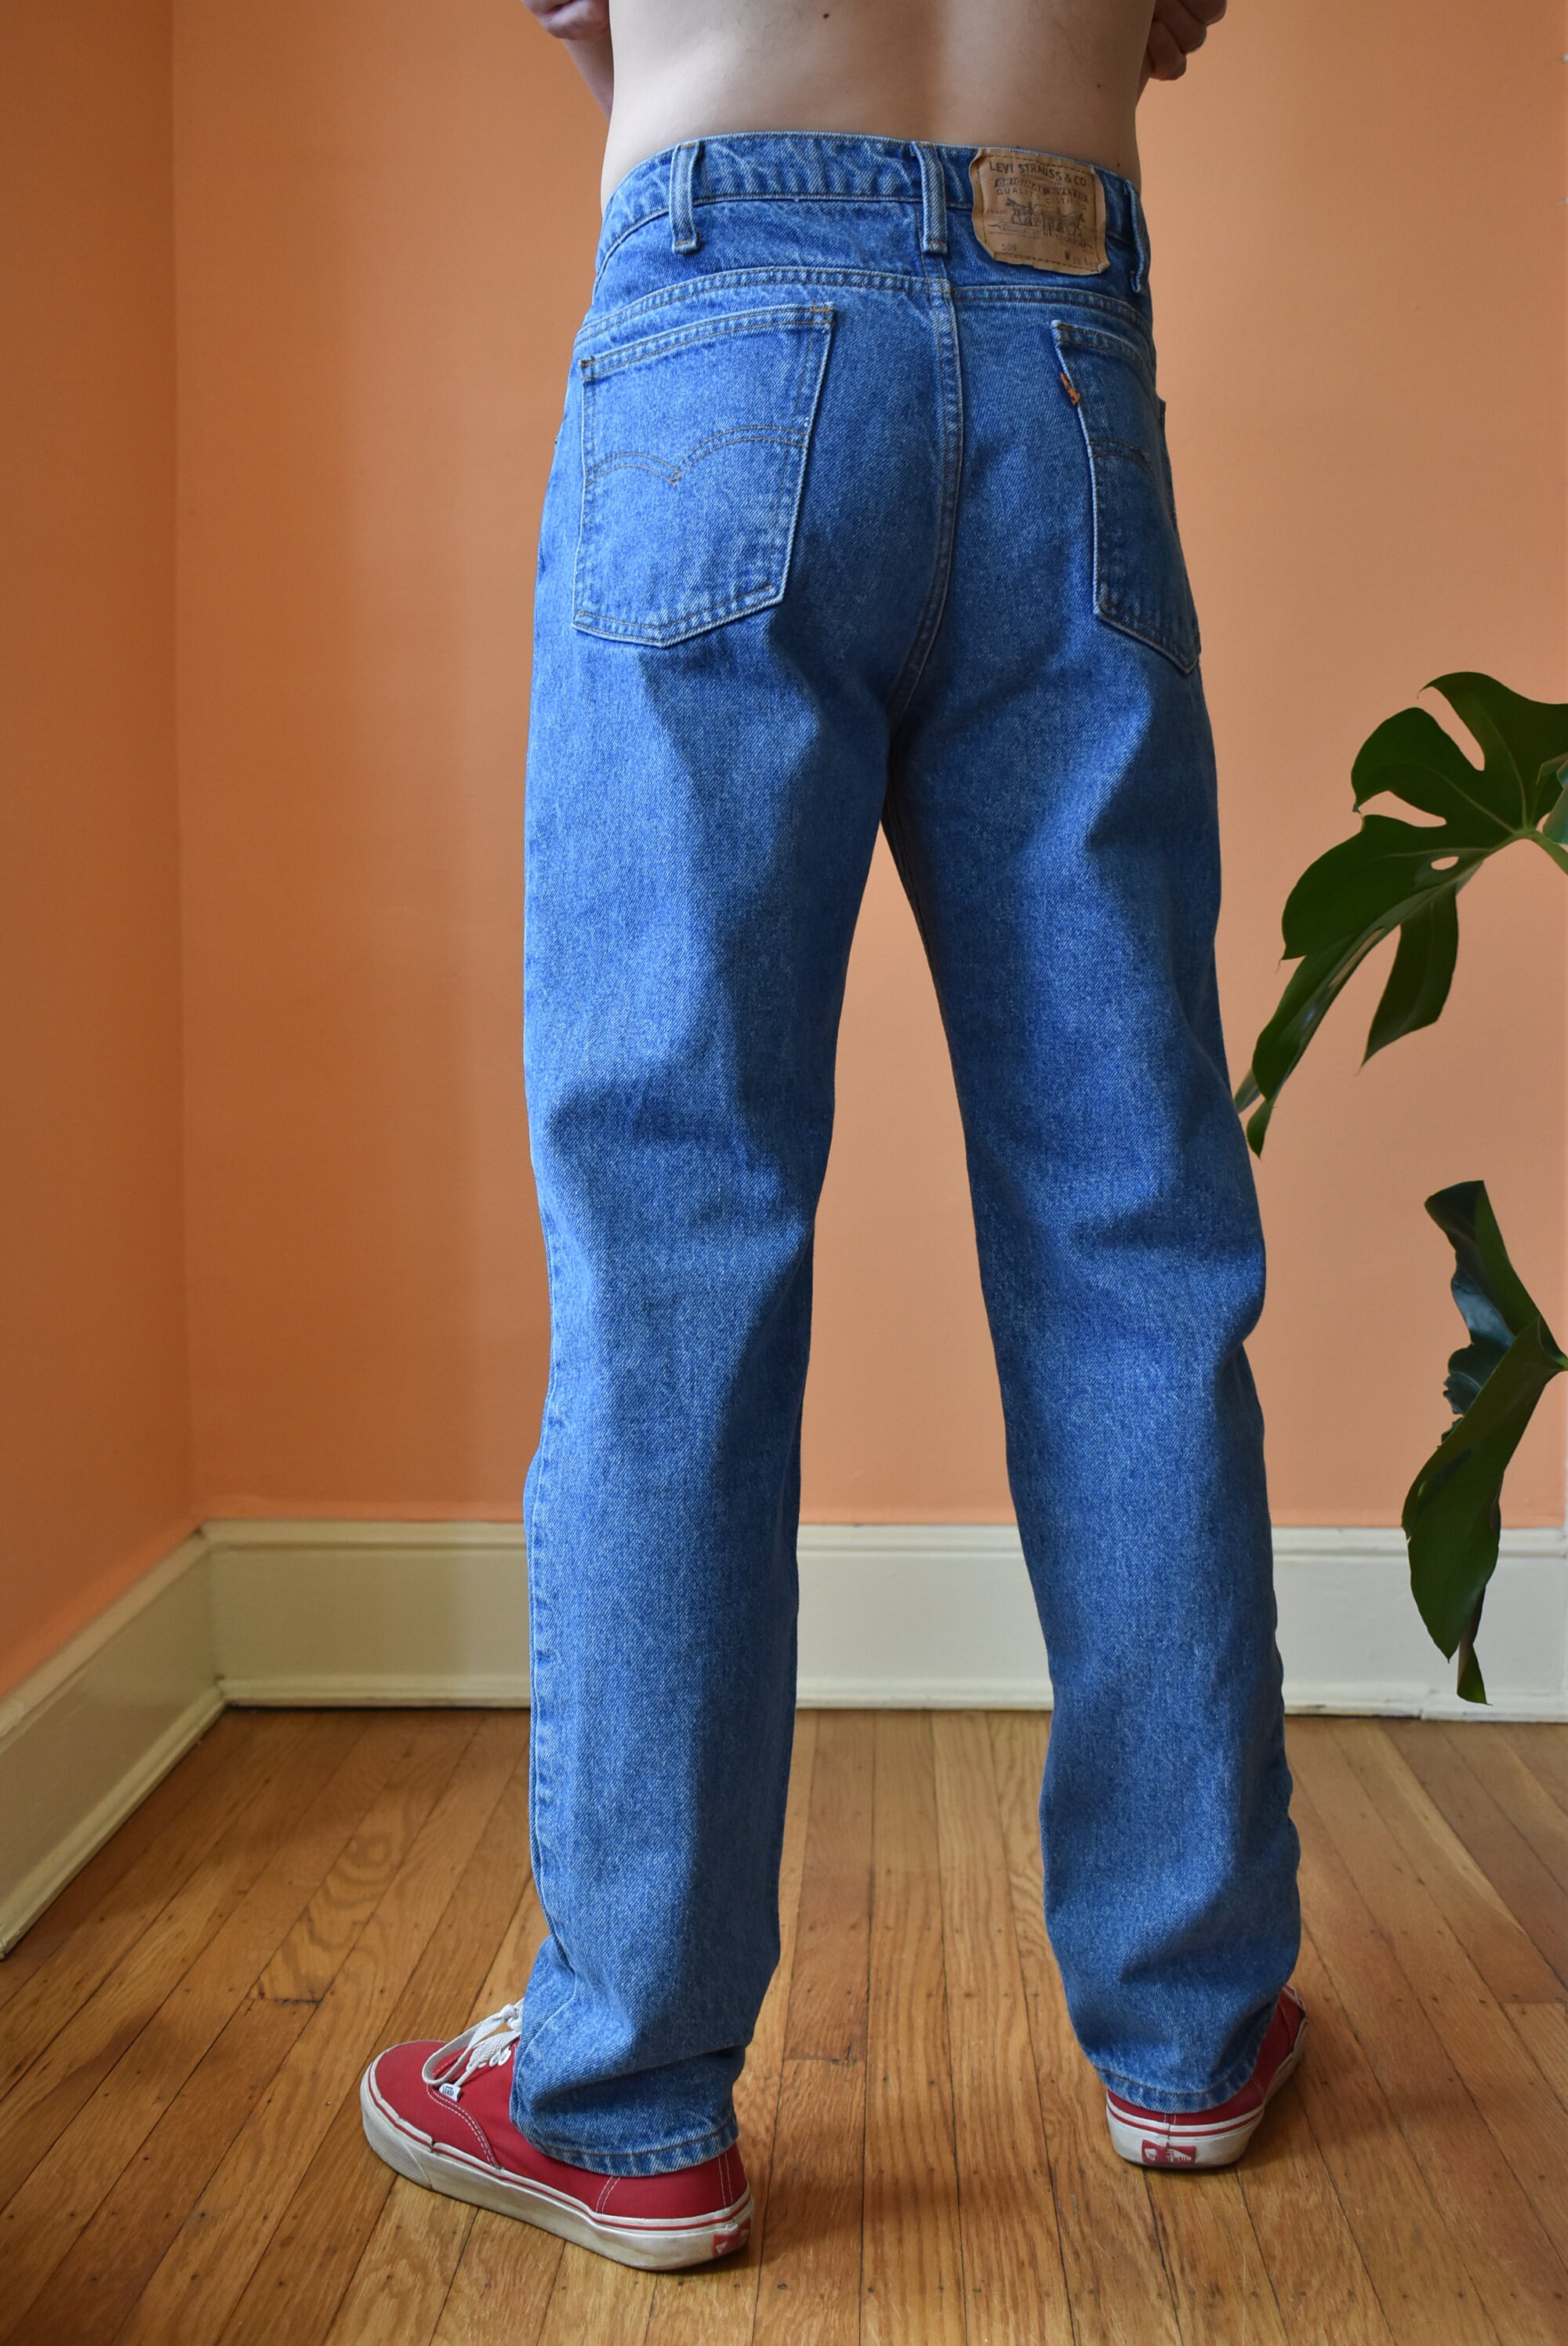 70s 80s LEVIS 509 Orange Tab Jeans Worn in Soft // 33 X 31 // - Etsy